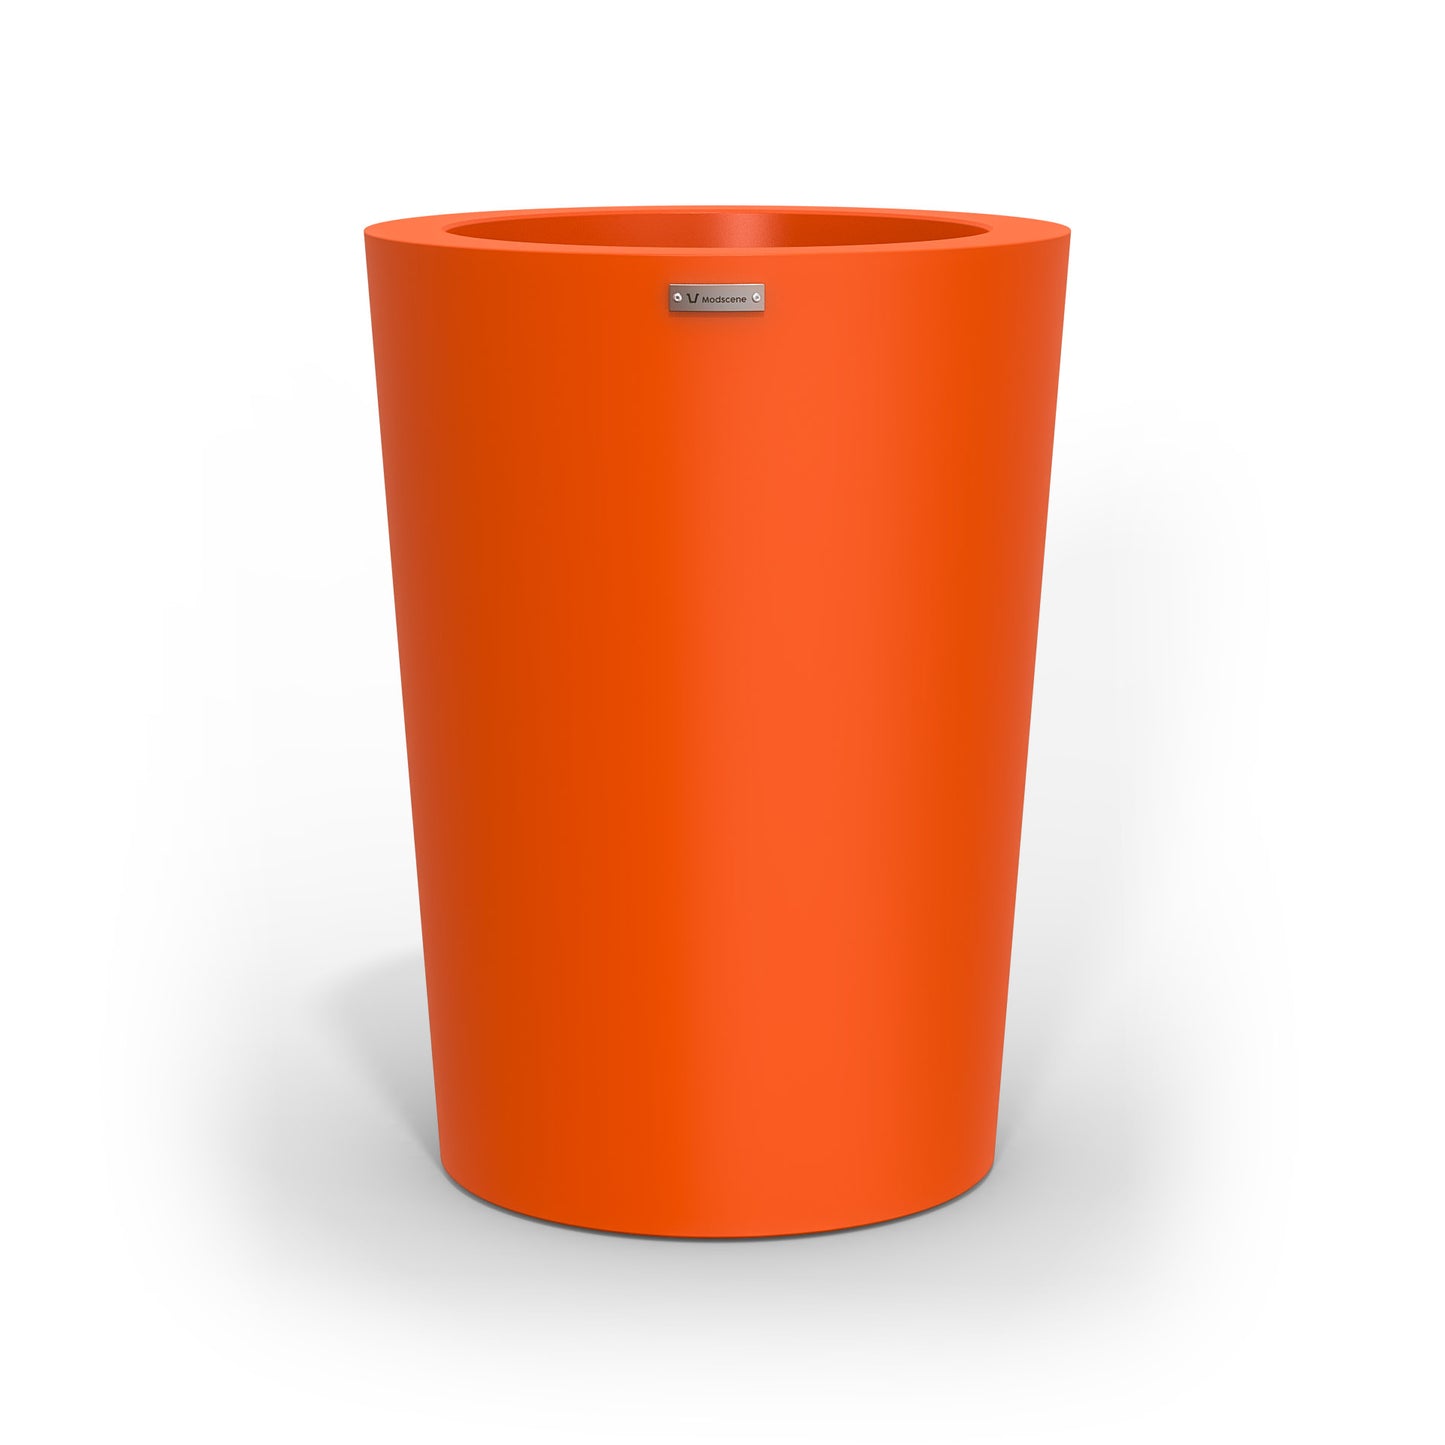 A modern style planter pot in orange. Made by Modscene NZ.